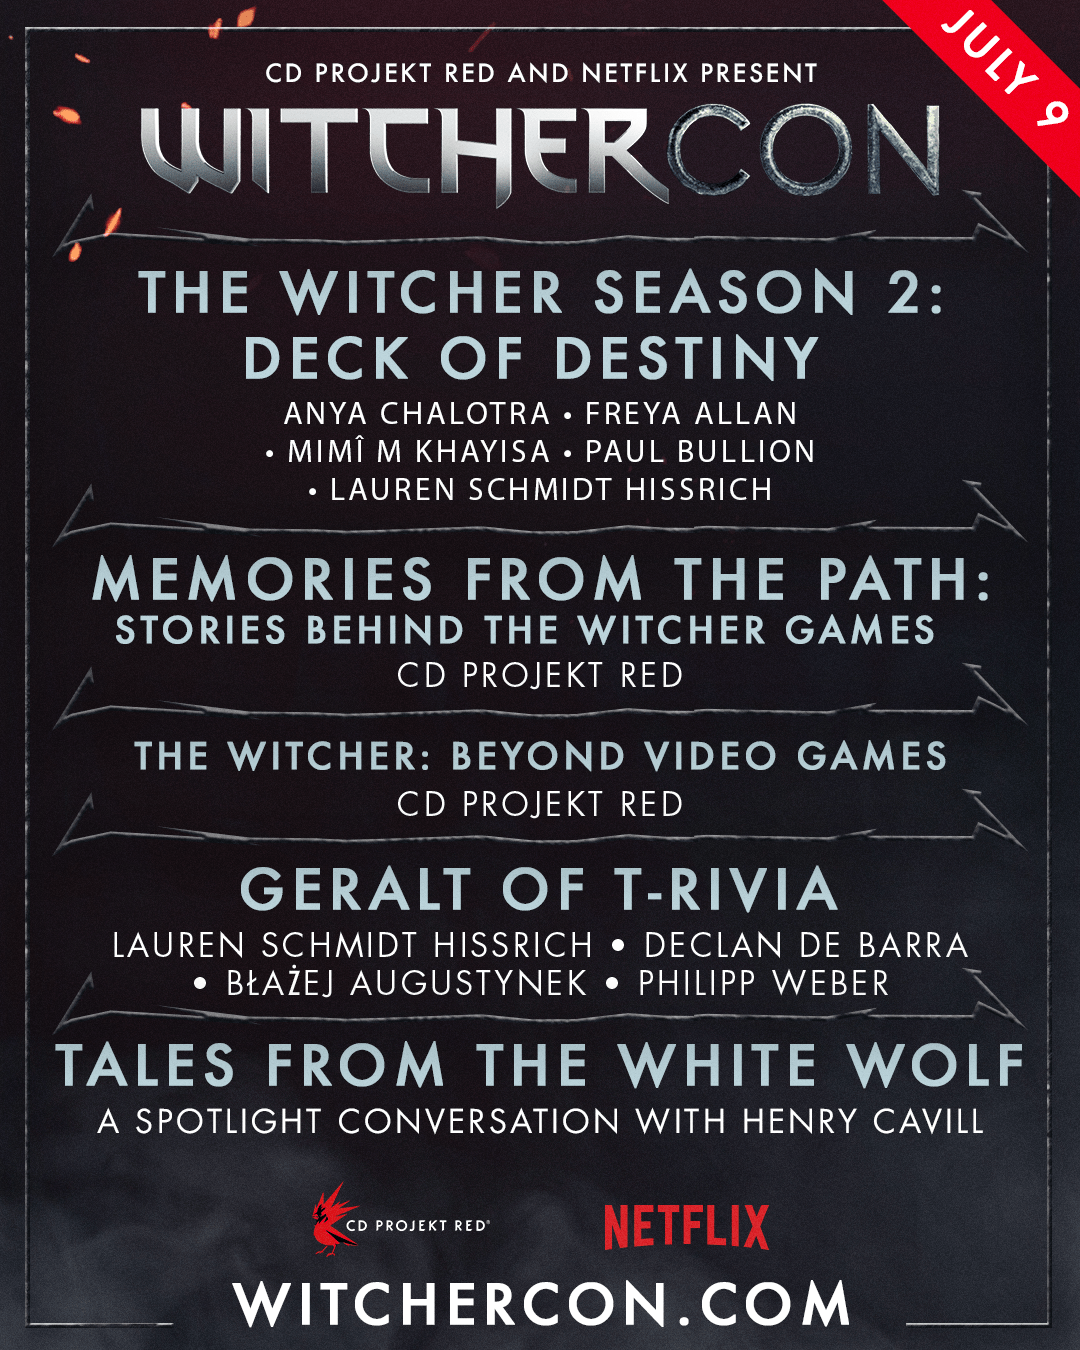 WitcherCon: the complete program